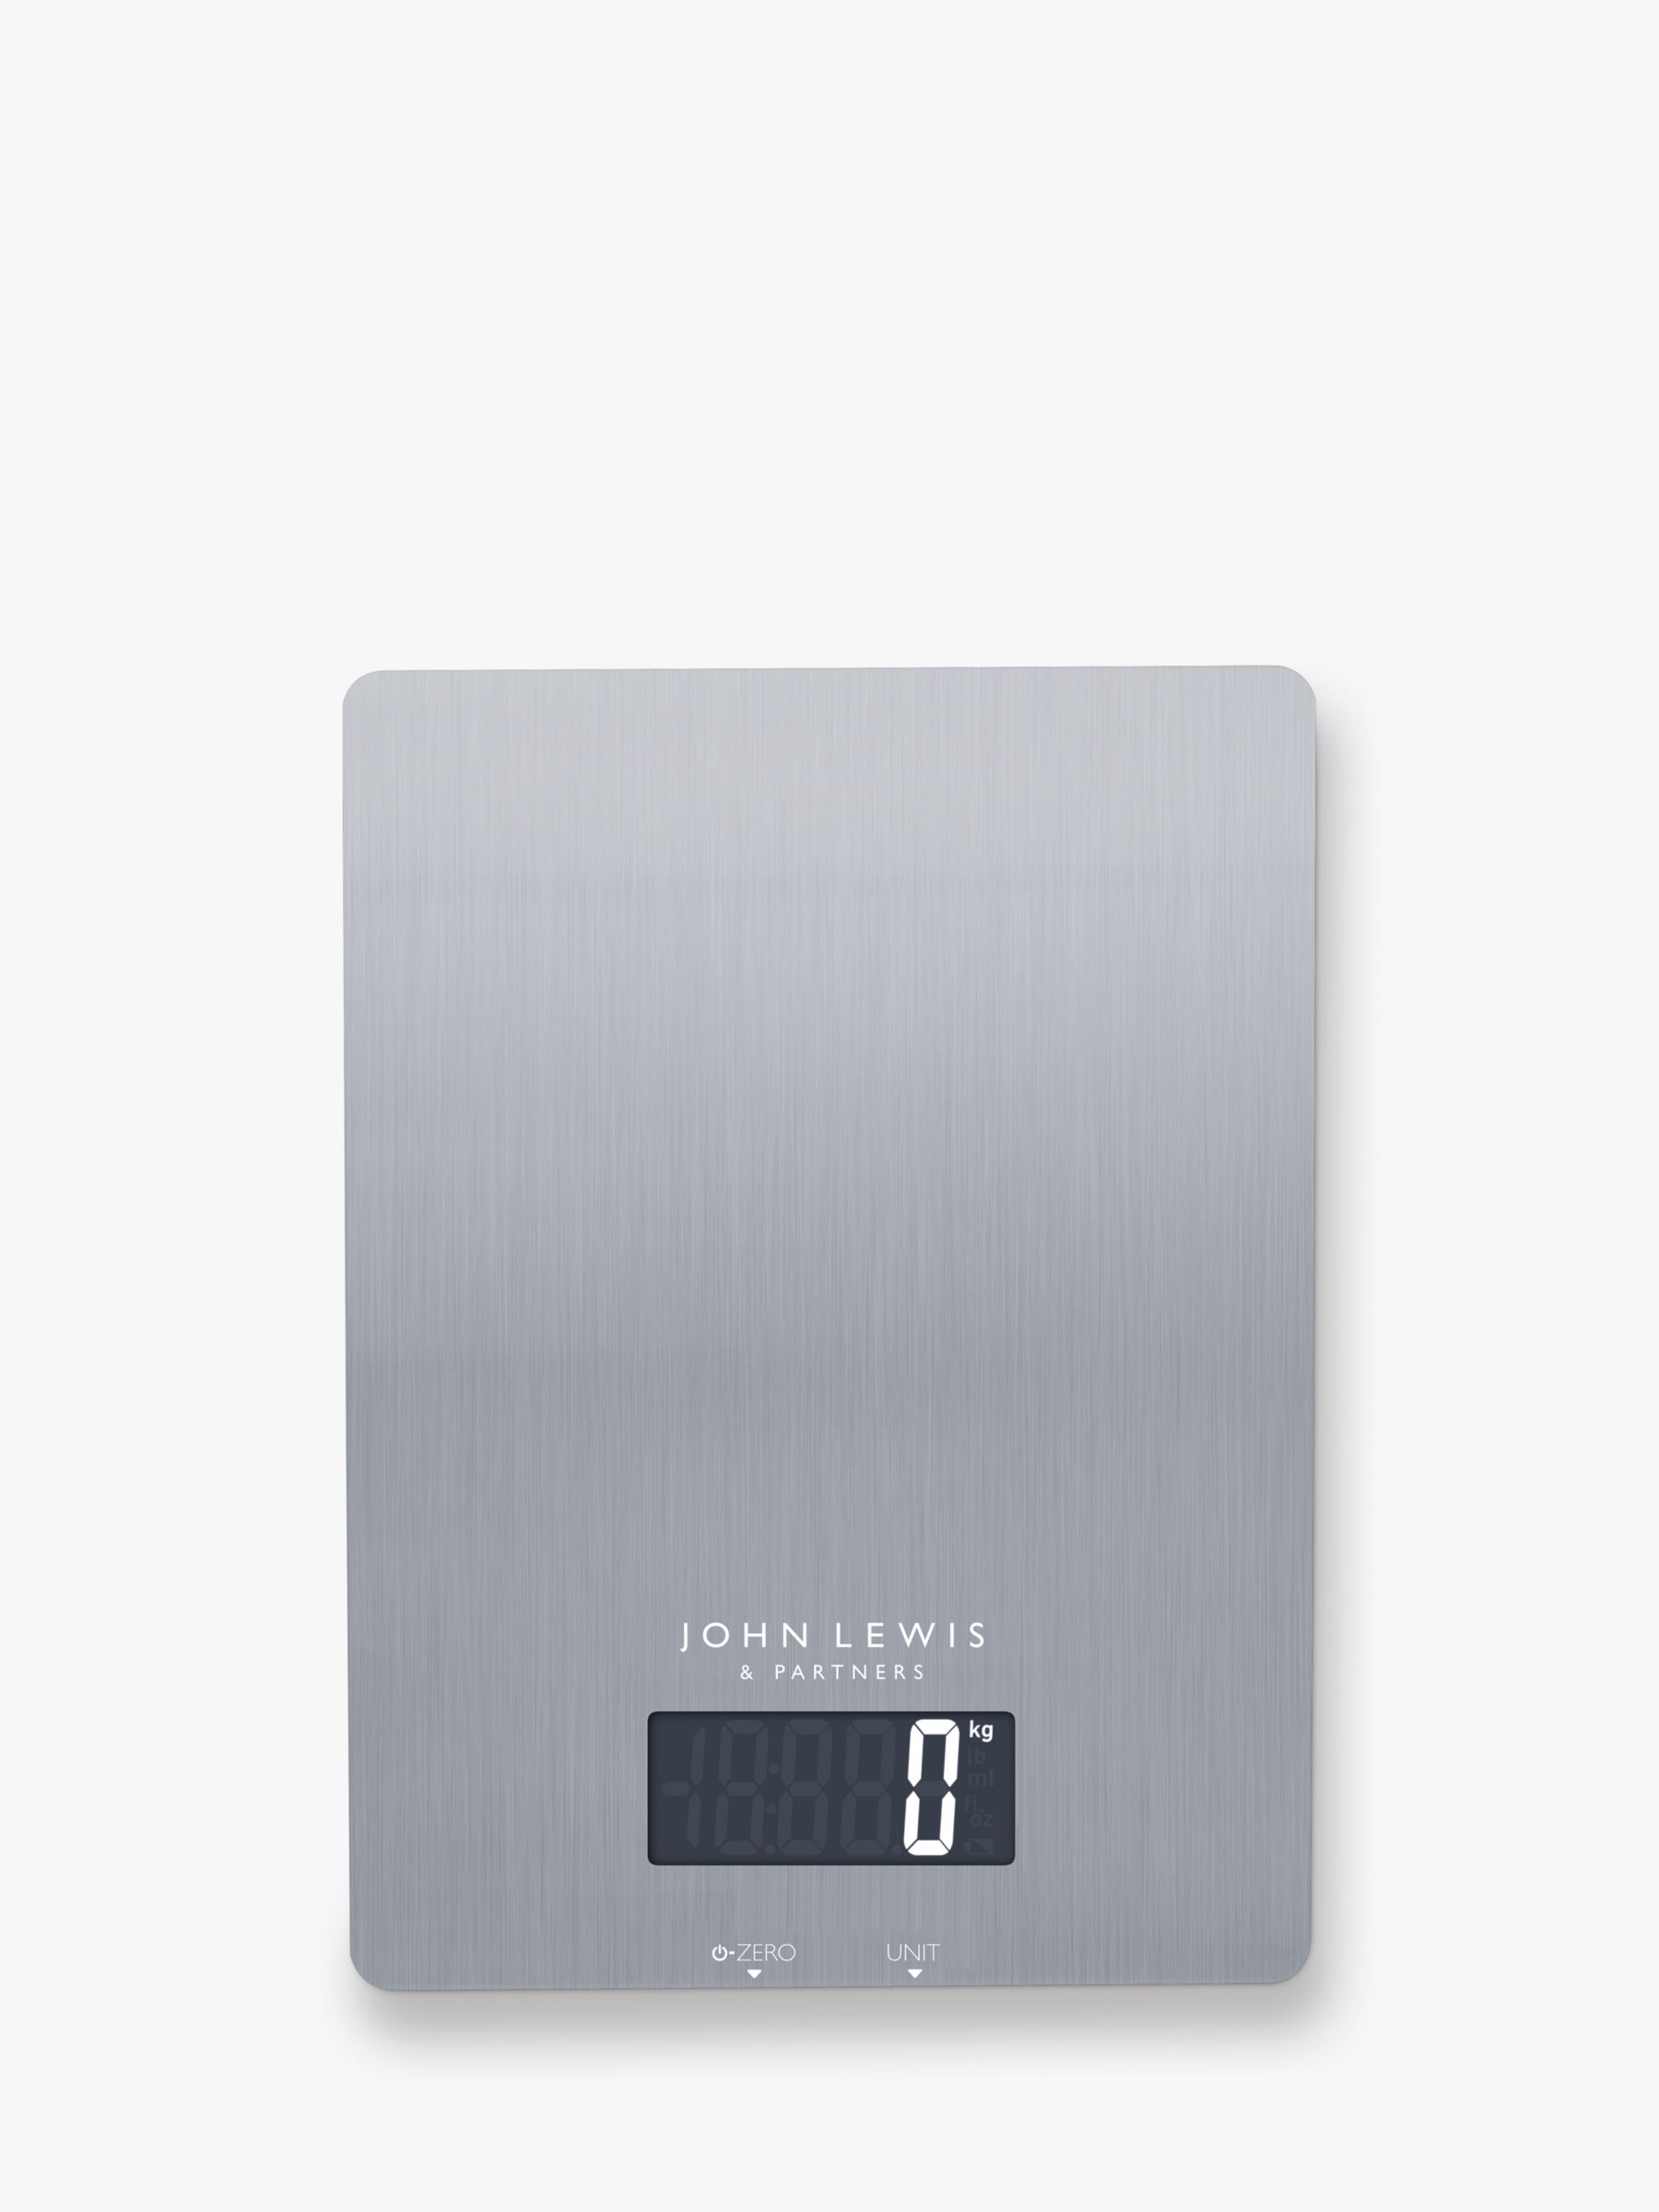 Photo of John lewis stainless steel glass platform digital kitchen scale 5kg silver